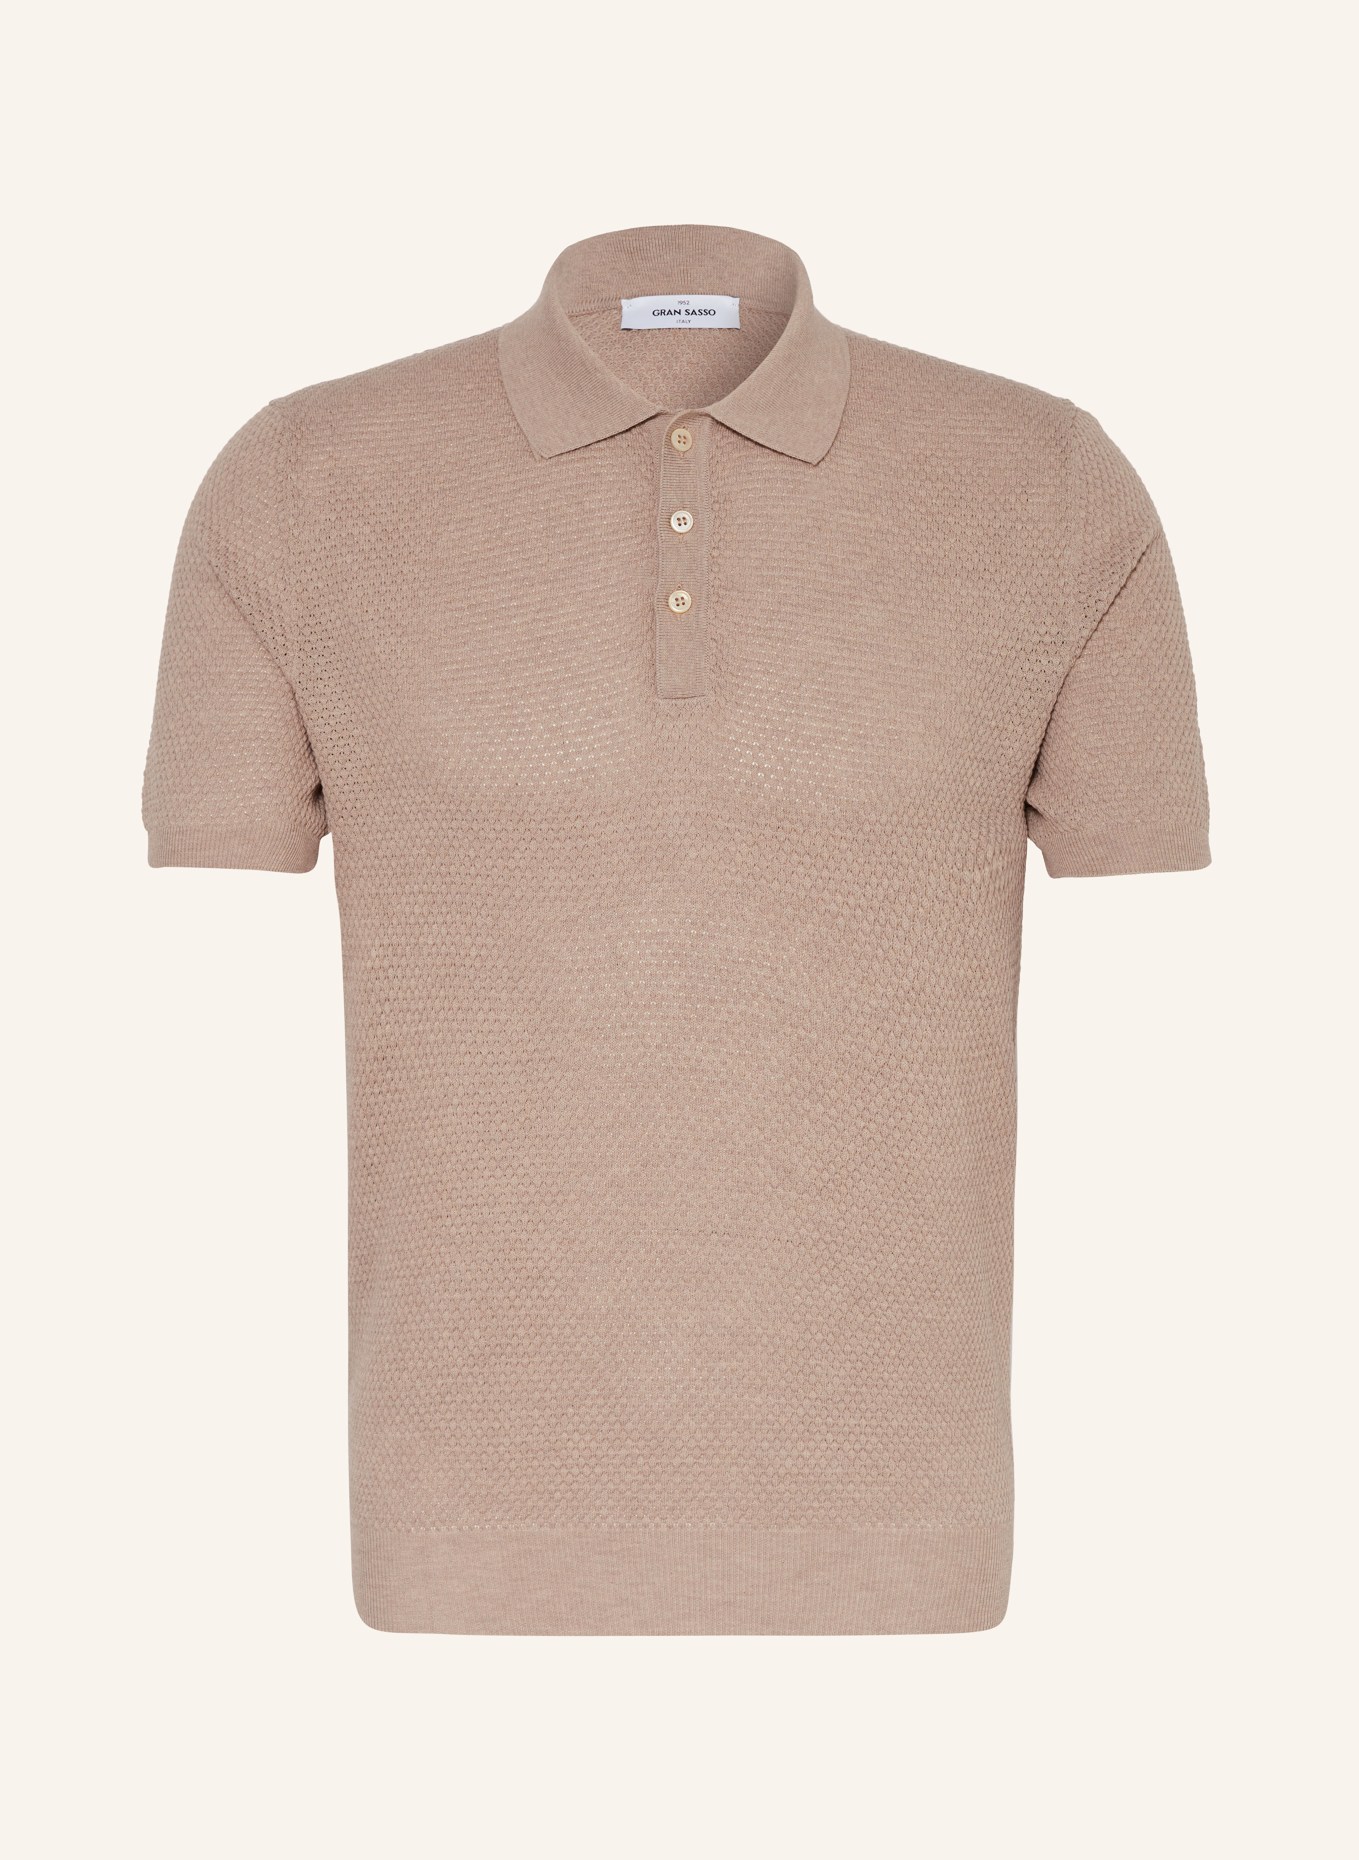 GRAN SASSO Strick-Poloshirt, Farbe: TAUPE (Bild 1)